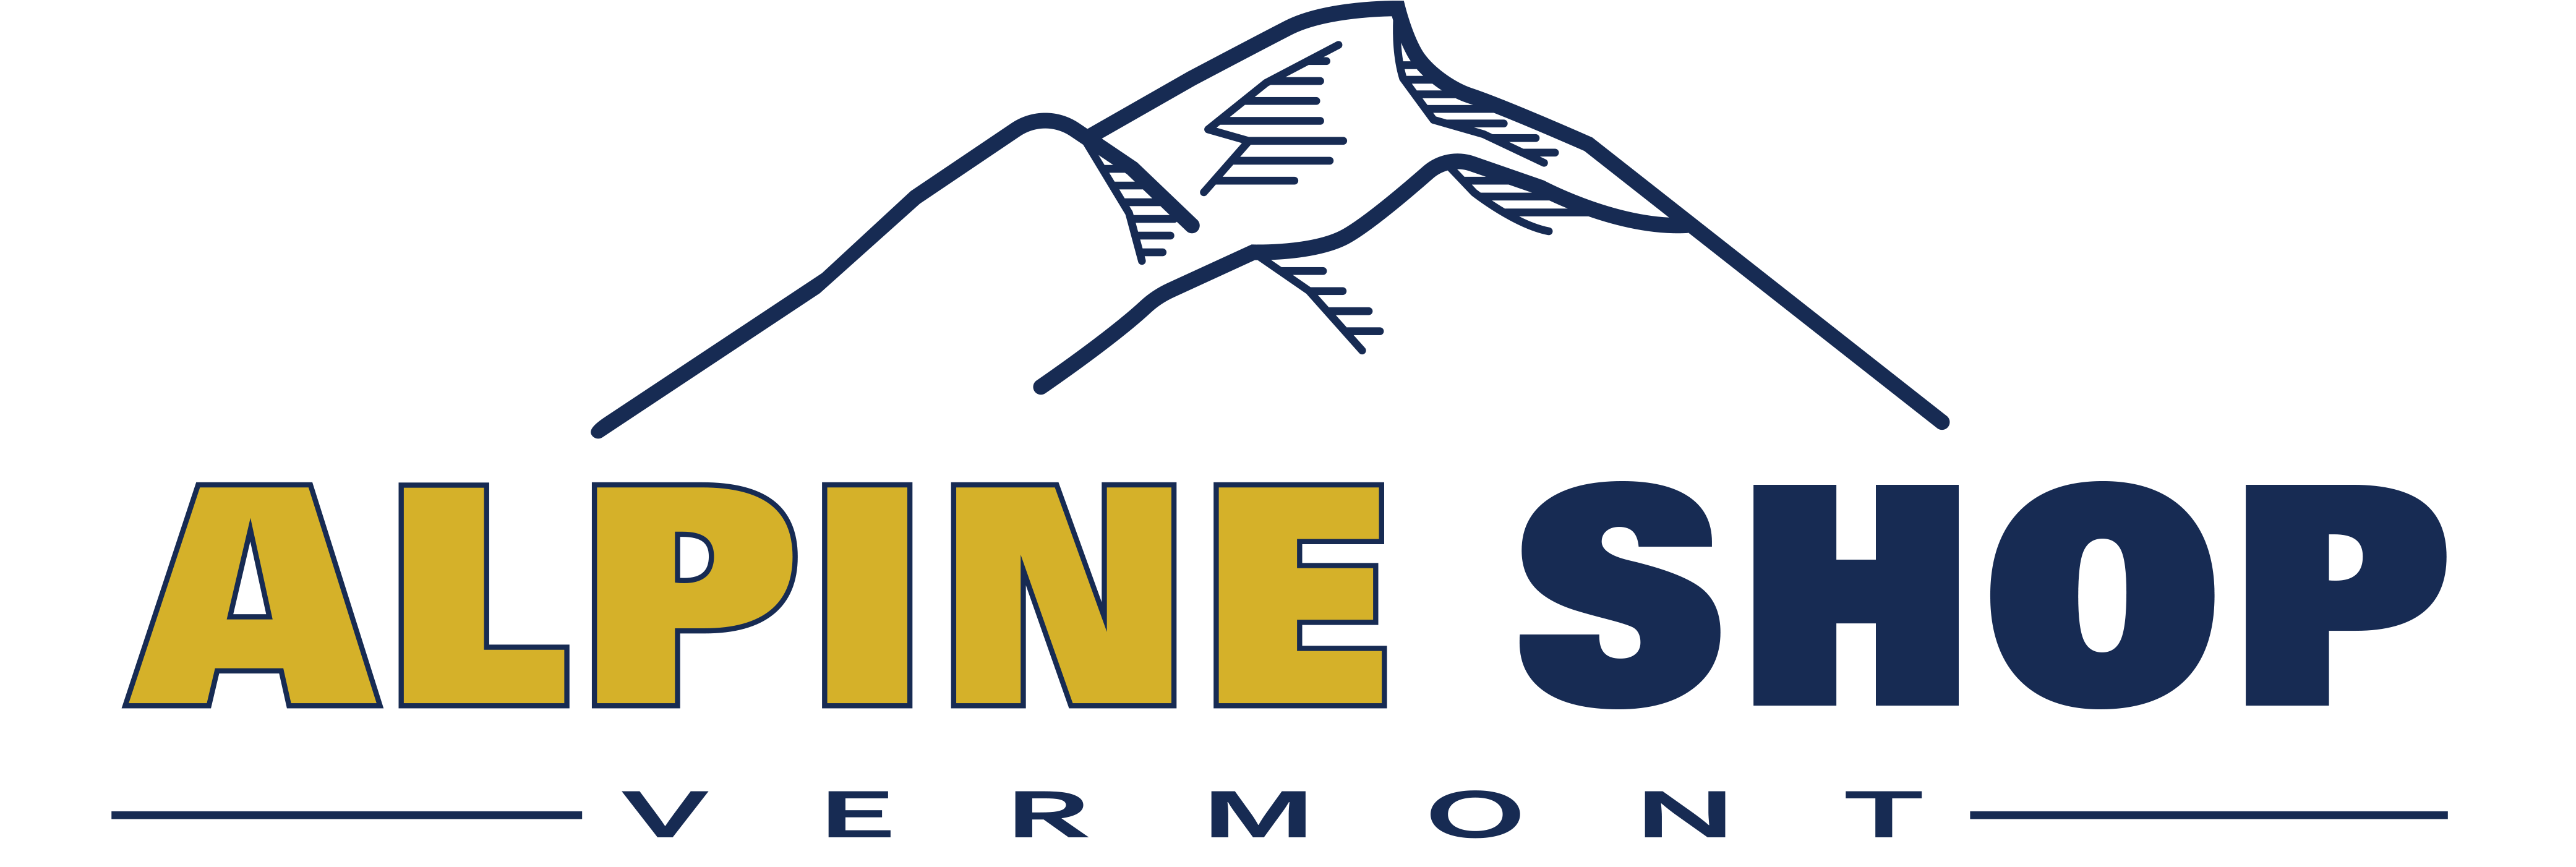 Alpine Shop logo - Mountain outline behind Alpine Shop Vermont text